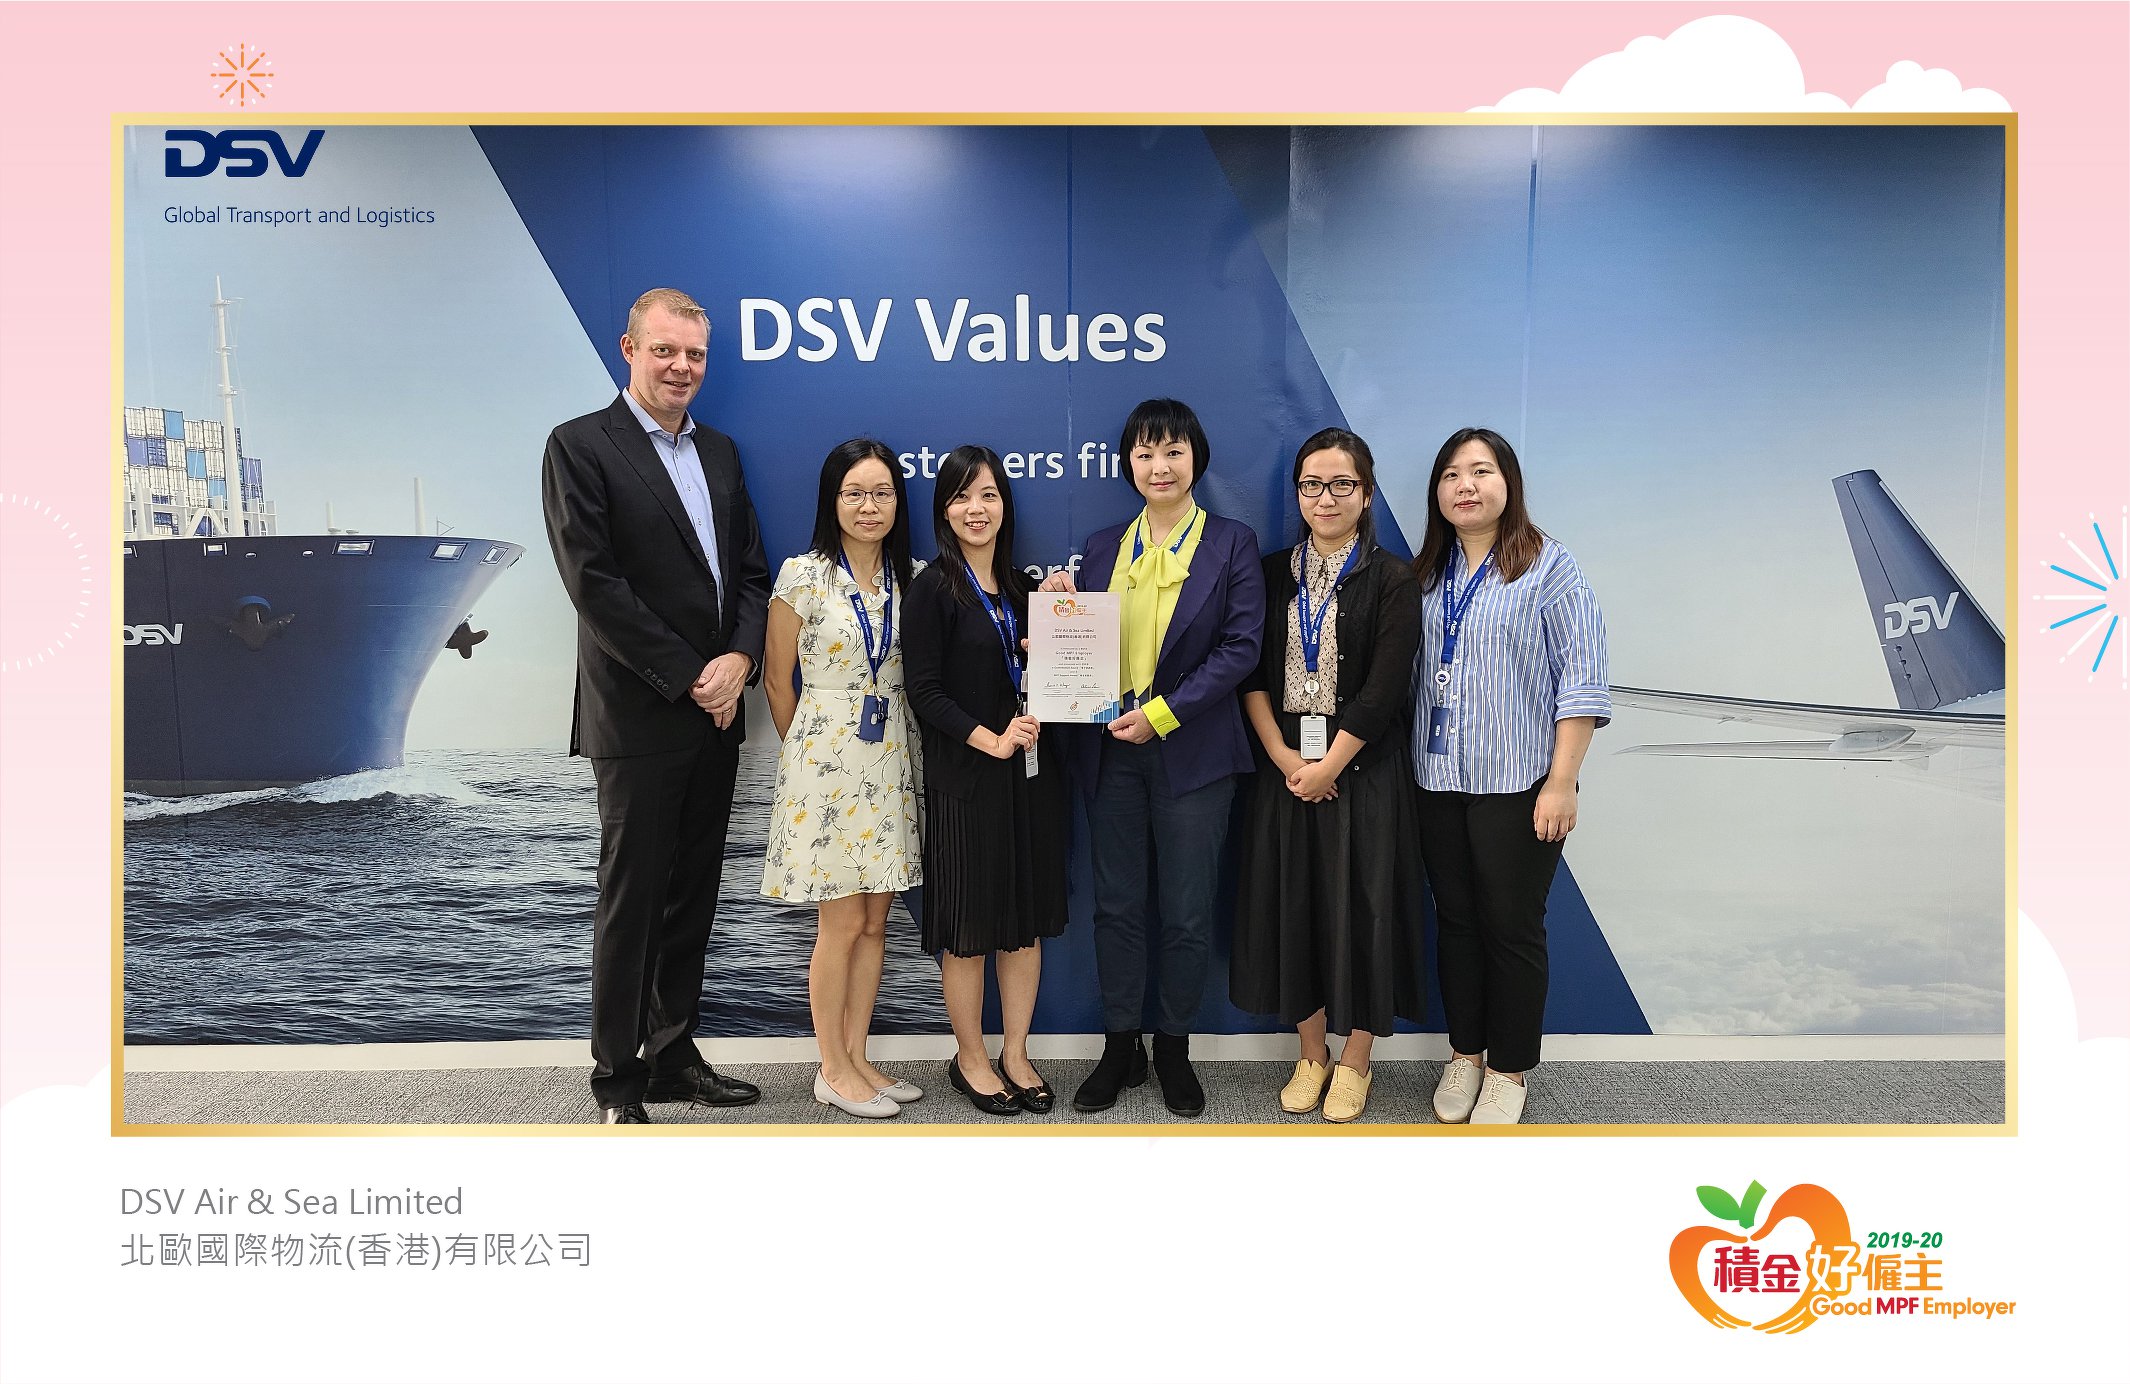 DSV Air & Sea Limited 北歐國際物流(香港)有限公司